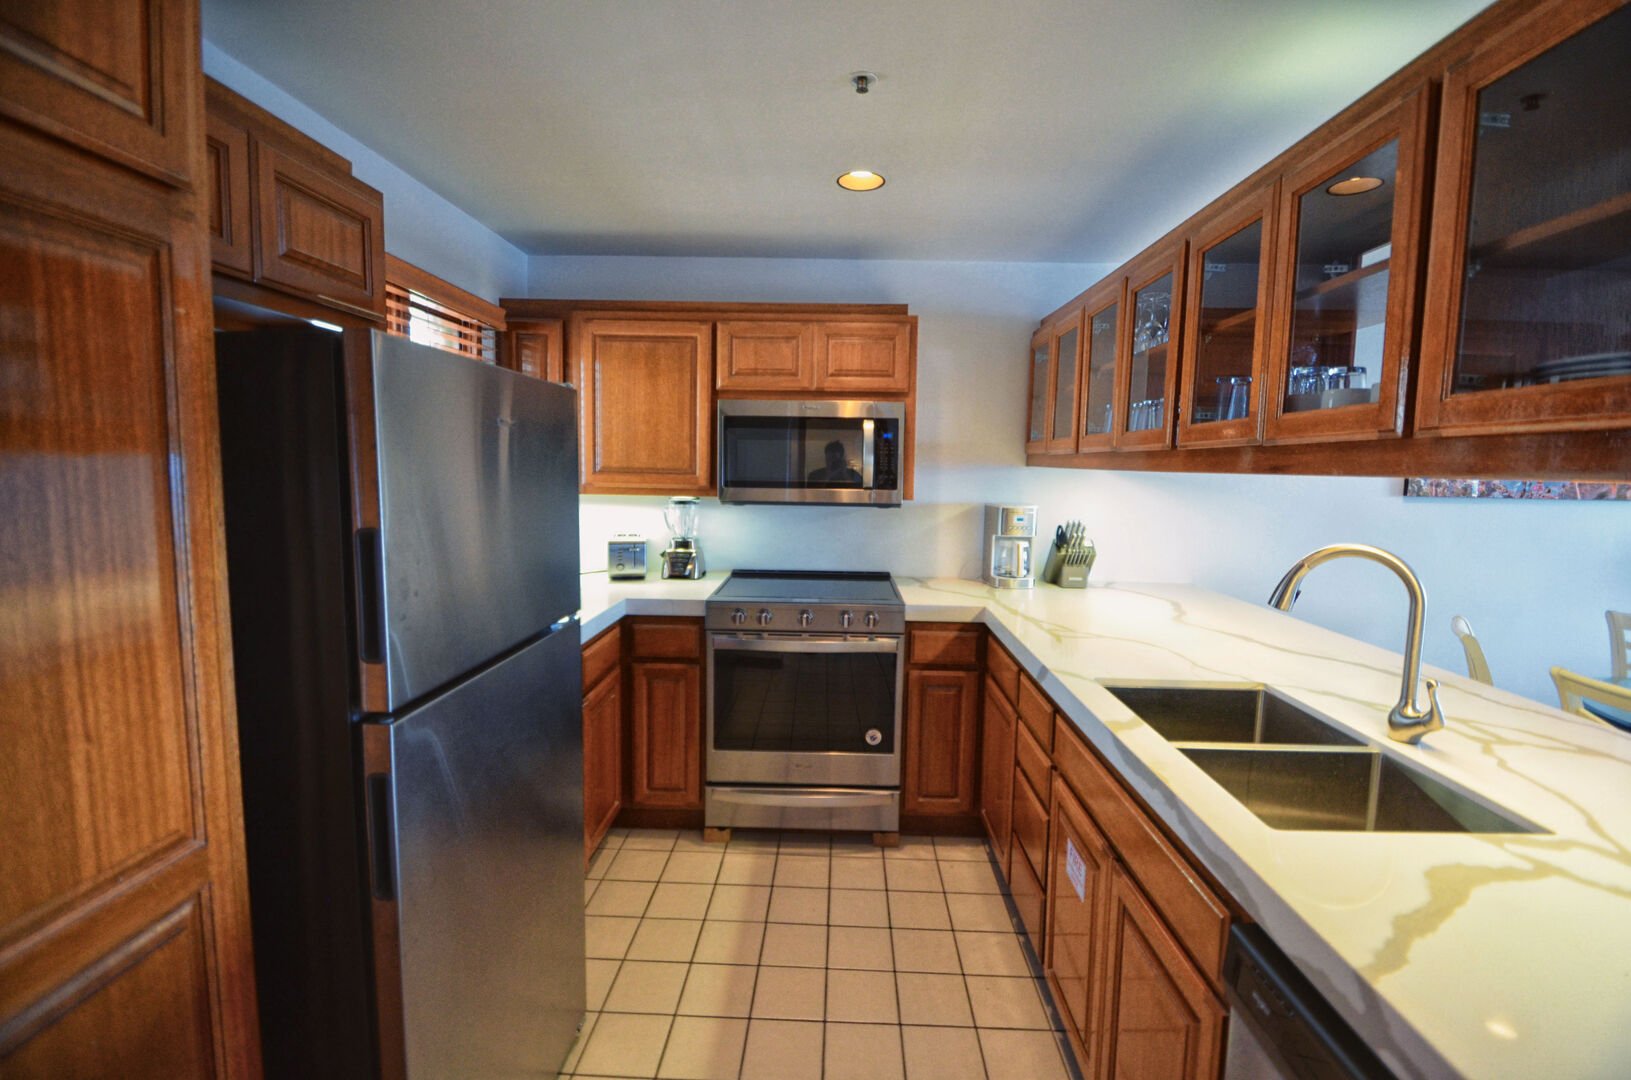 Kitchen with quartz countertops, stainless steel appliances, coffee maker, blender, sink, toaster